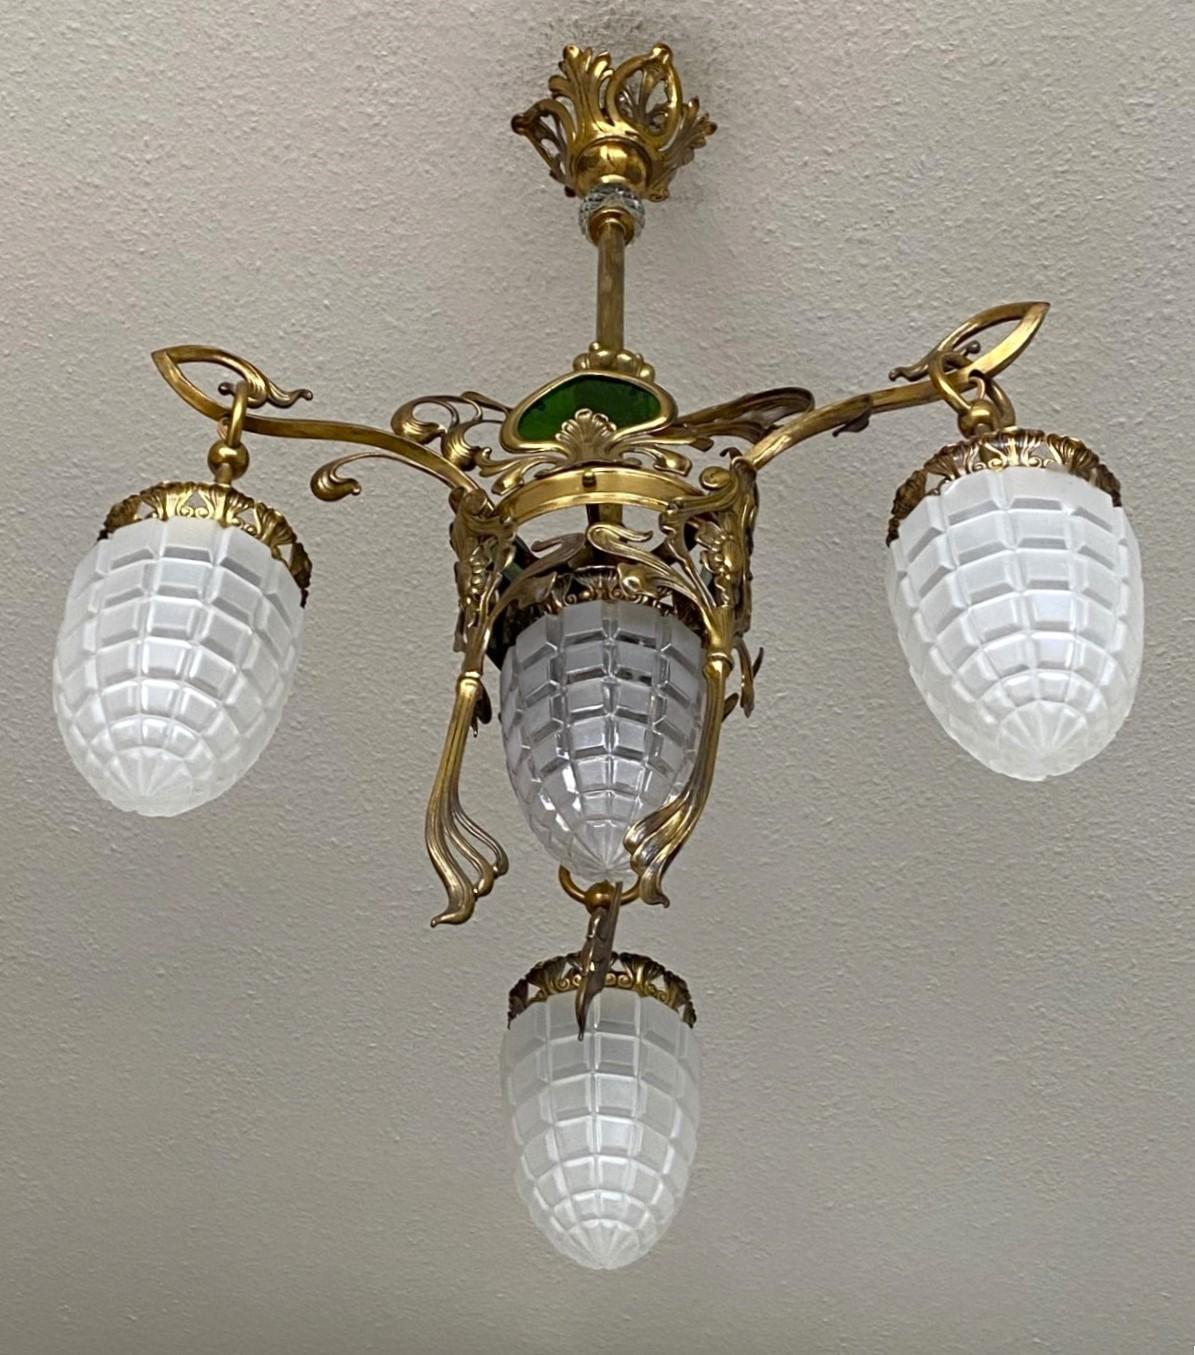 20th Century French Art Nouveau Period Jugendstil Brass Glass Four-Light Chandelier For Sale